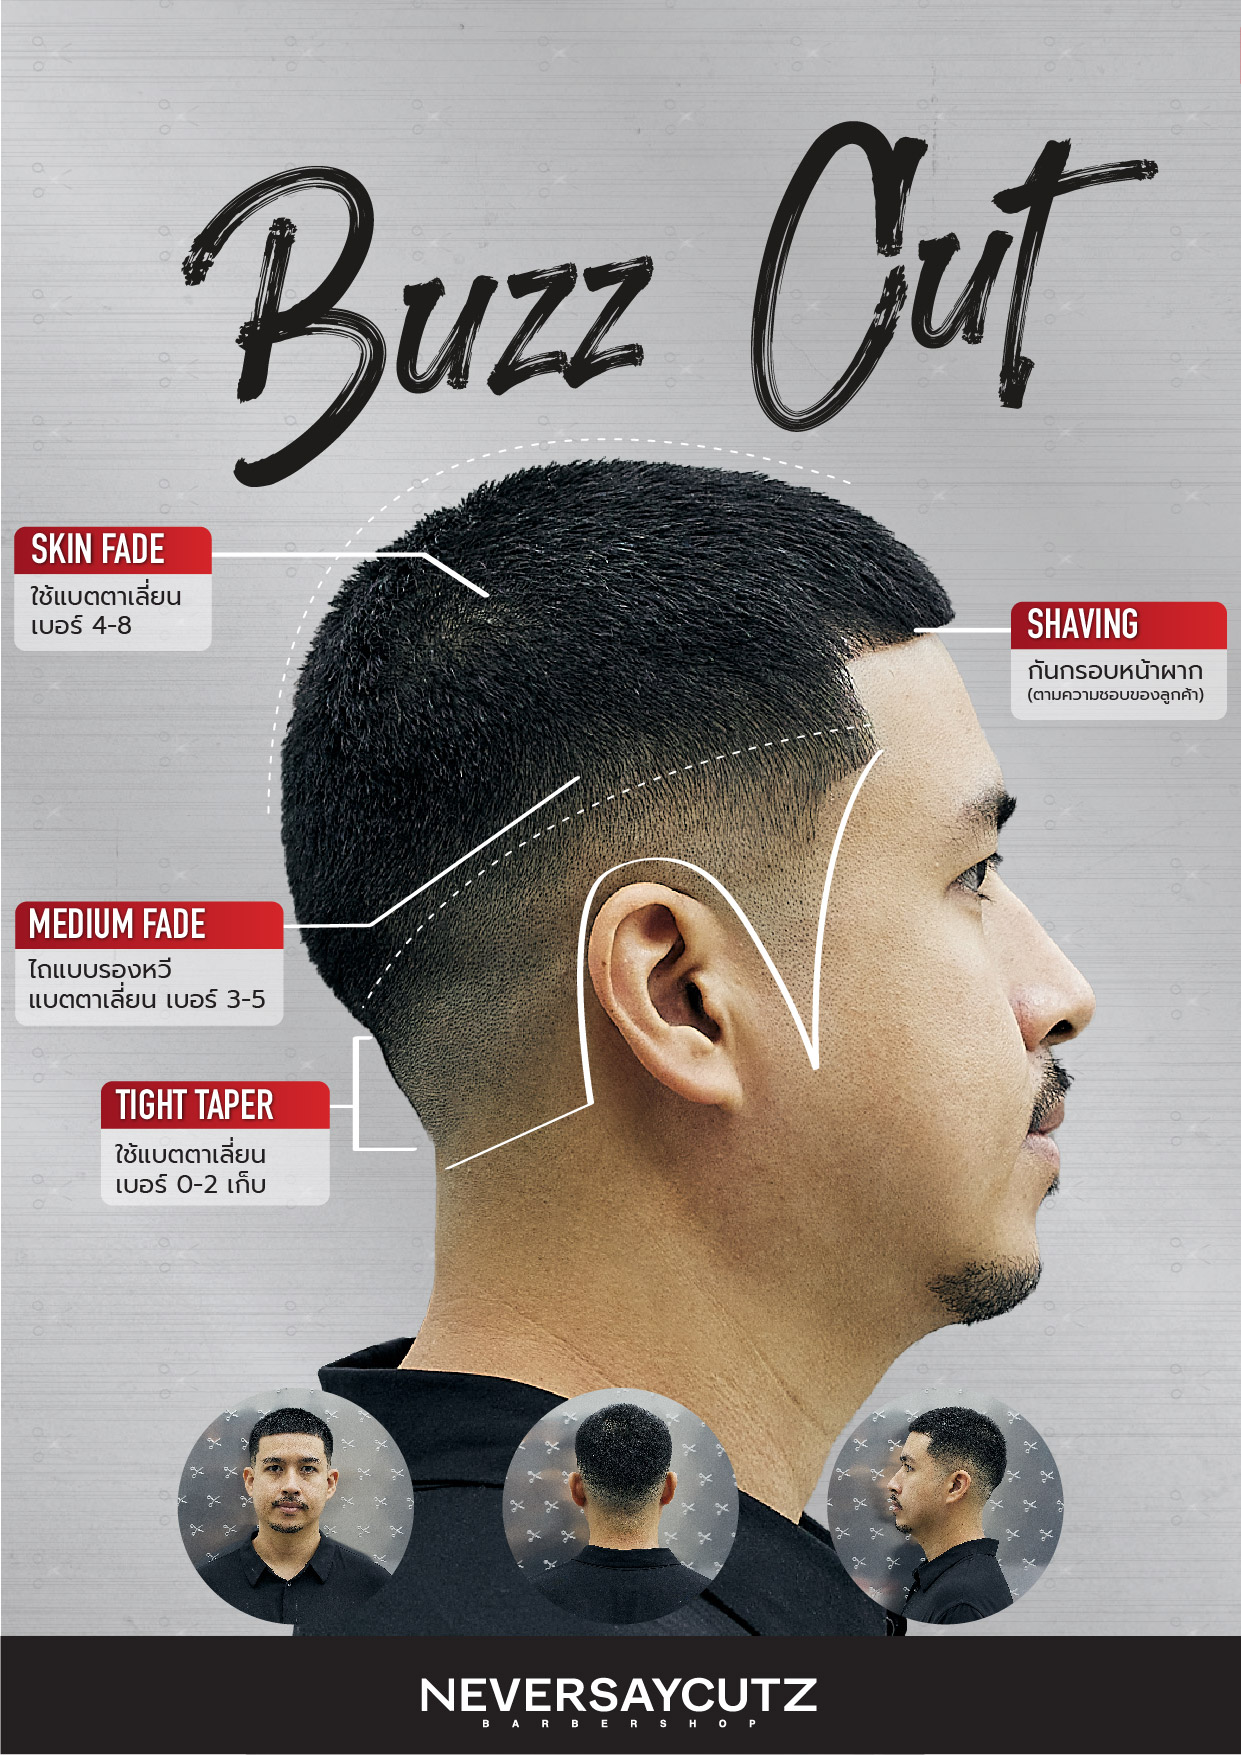 buzz cut number 5